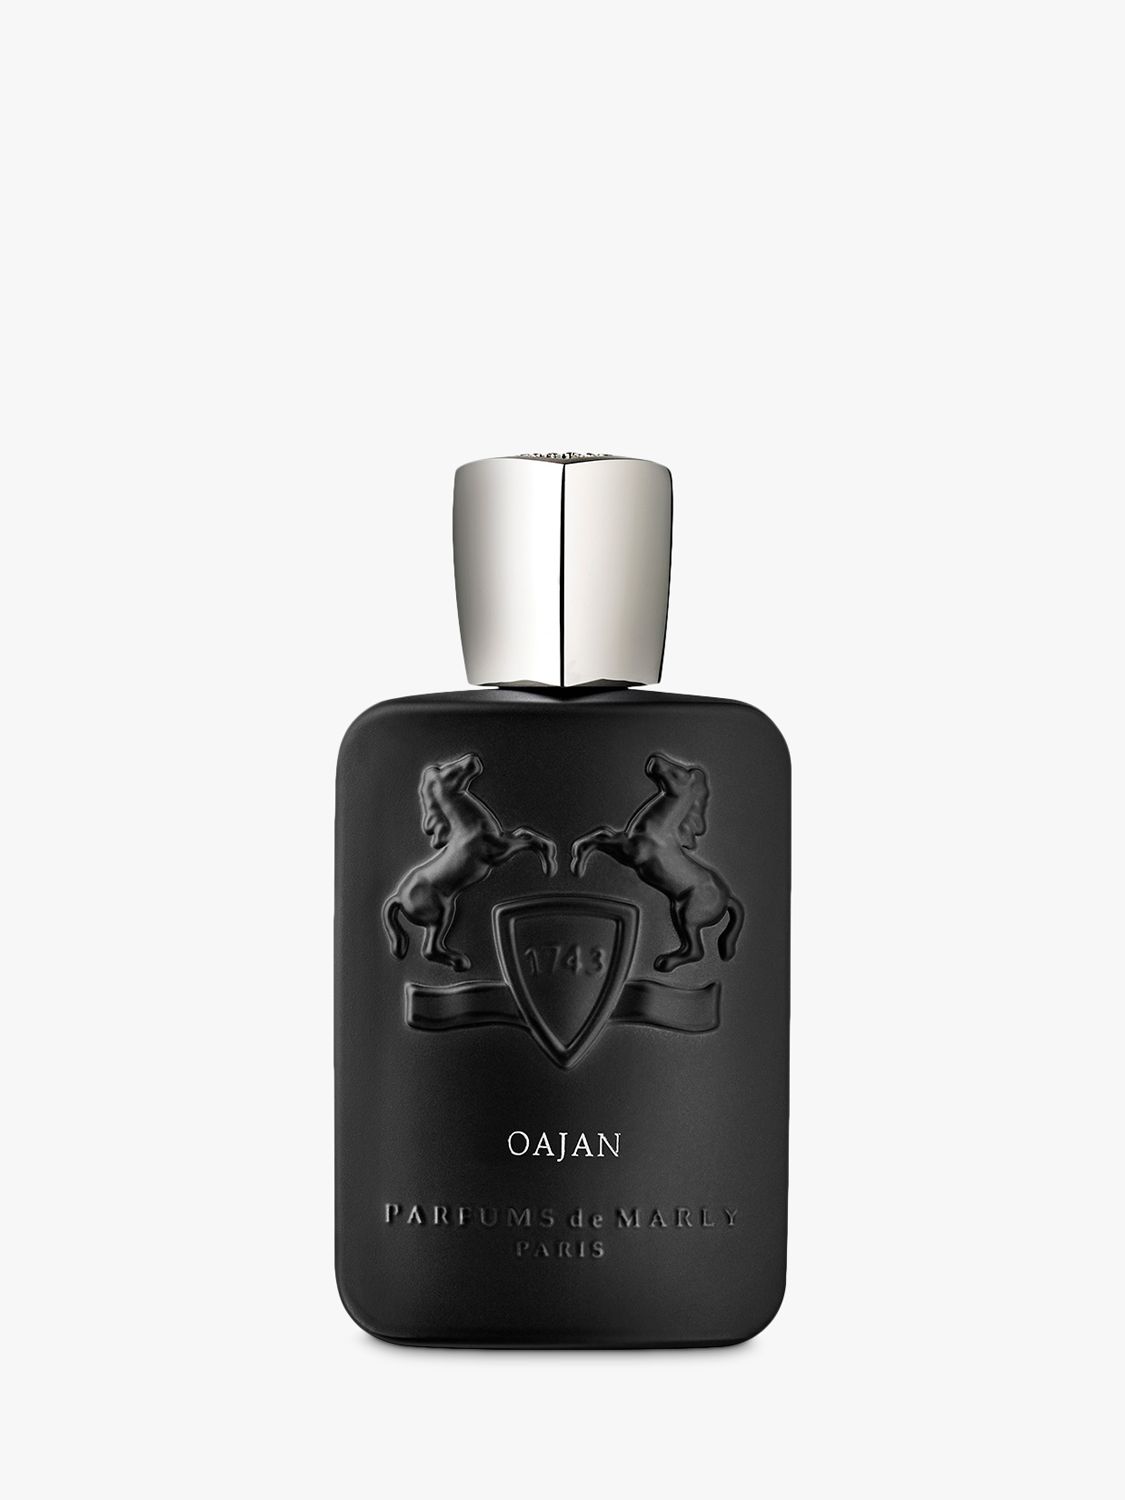 Parfums de Marly Oajan Eau de Parfum, 125ml